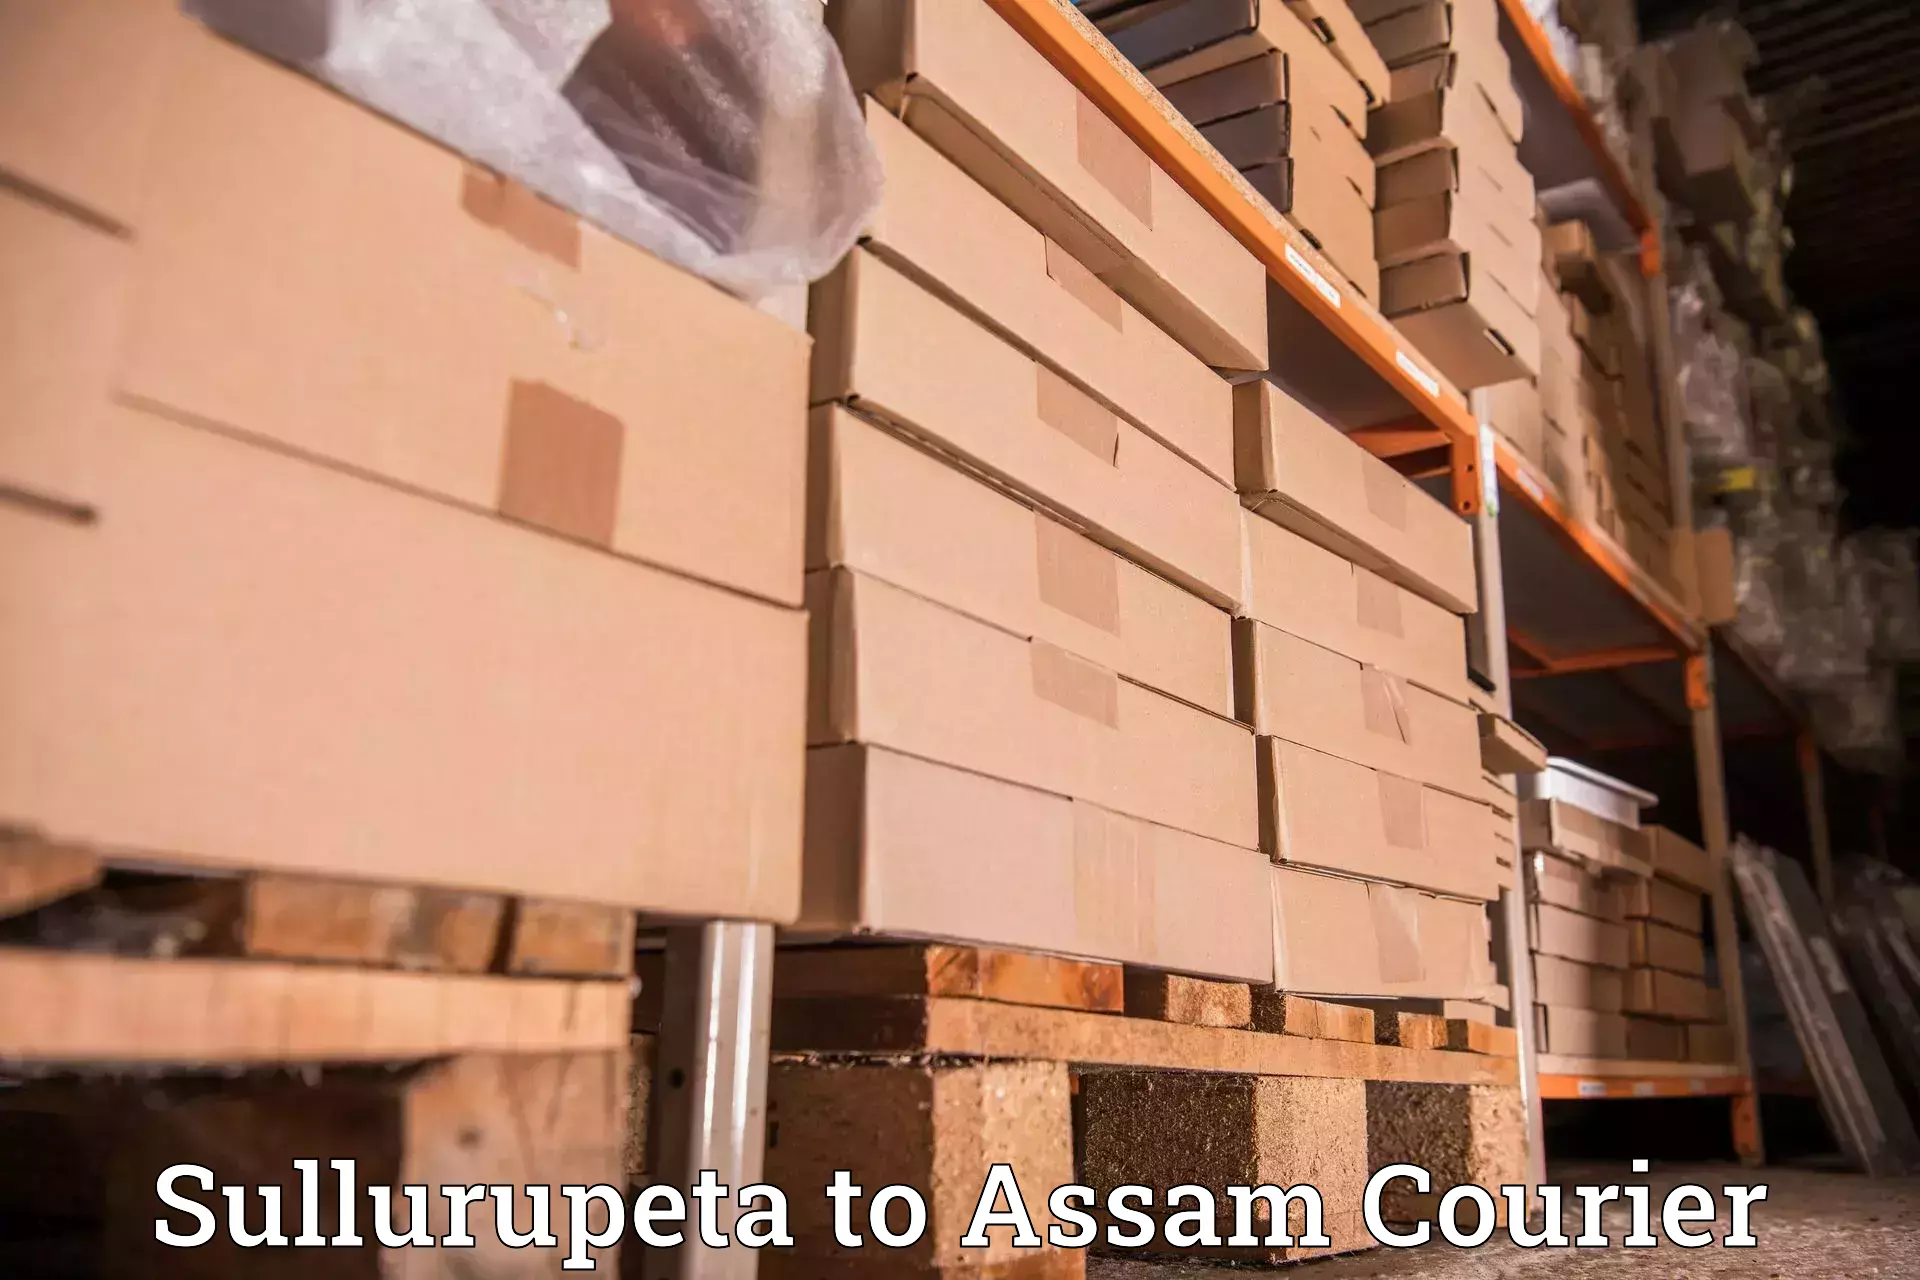 Courier service innovation Sullurupeta to Assam